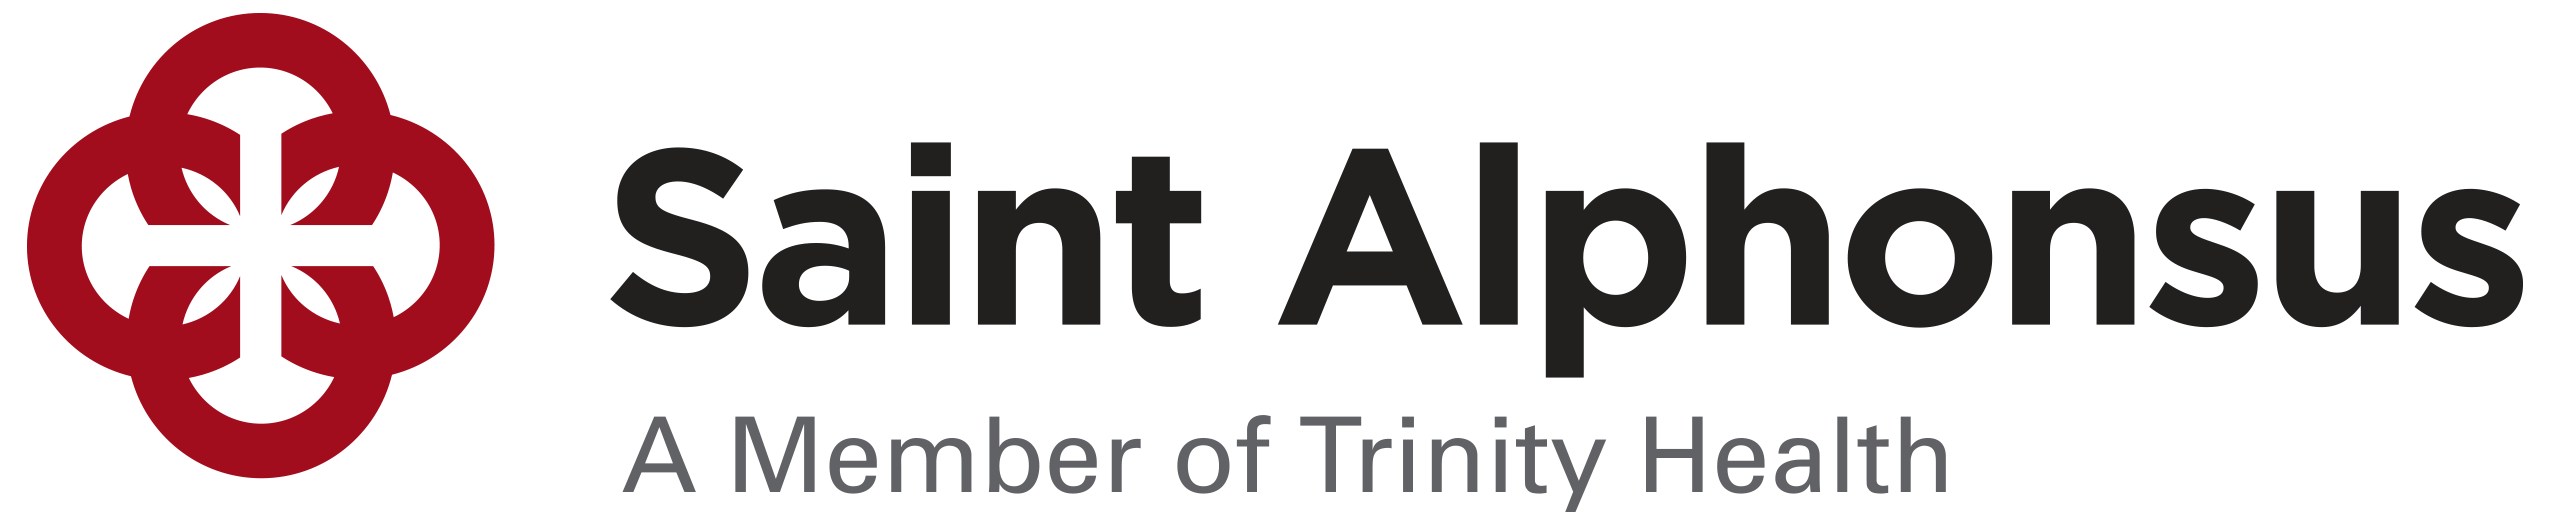 SA Trinity logo